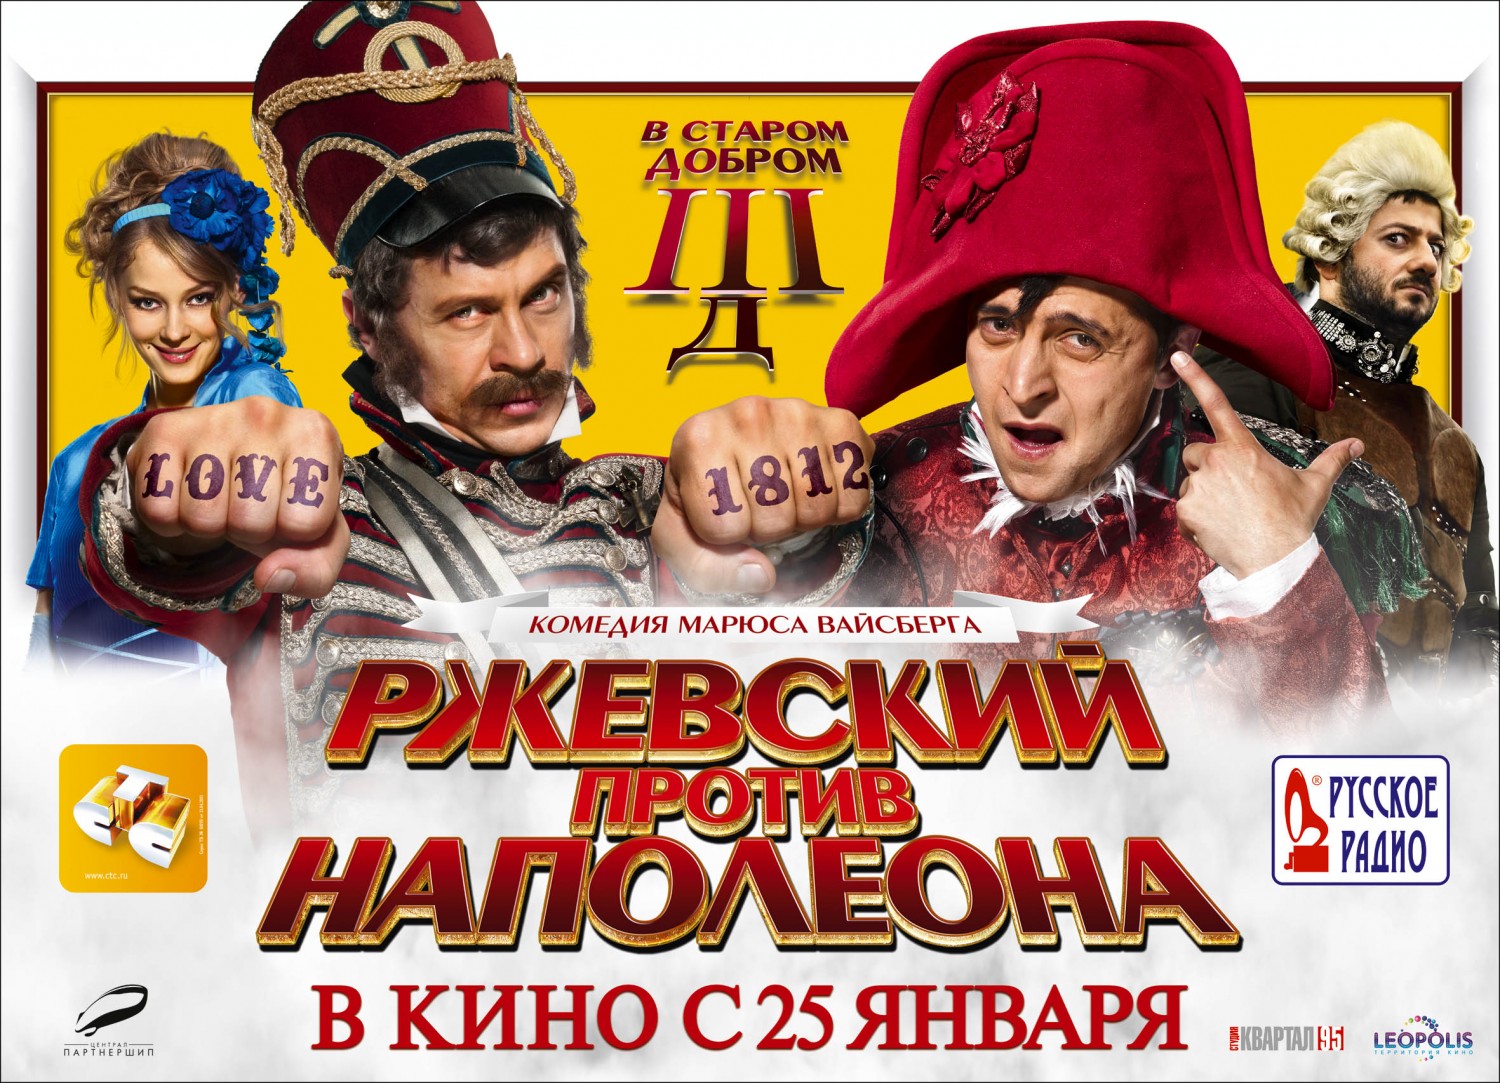 Extra Large Movie Poster Image for Rzhevskiy protiv Napoleona (#2 of 2)